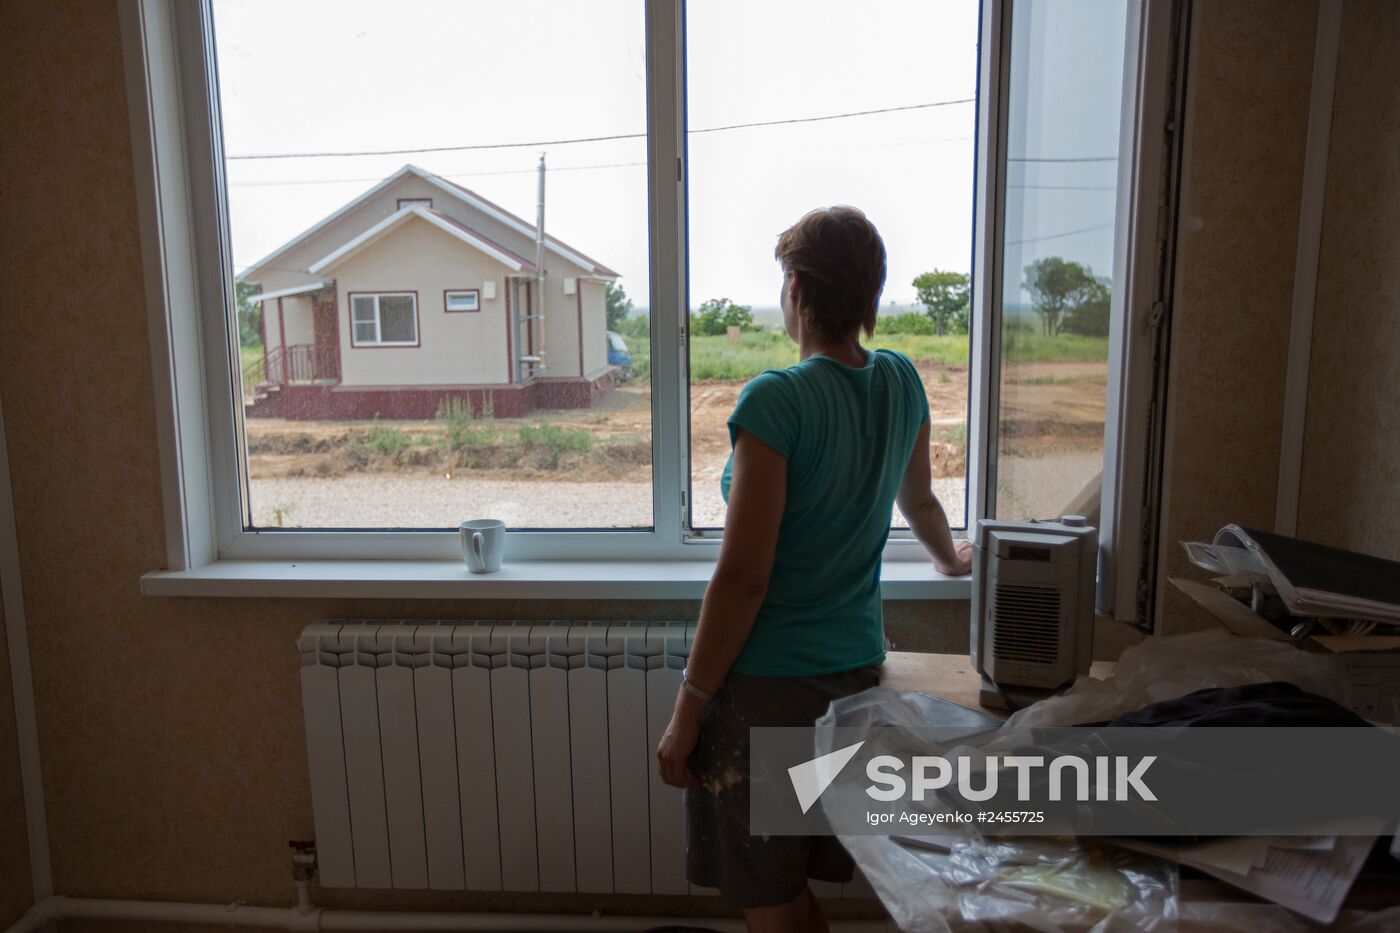 Houses built for flood victims in Amur Region